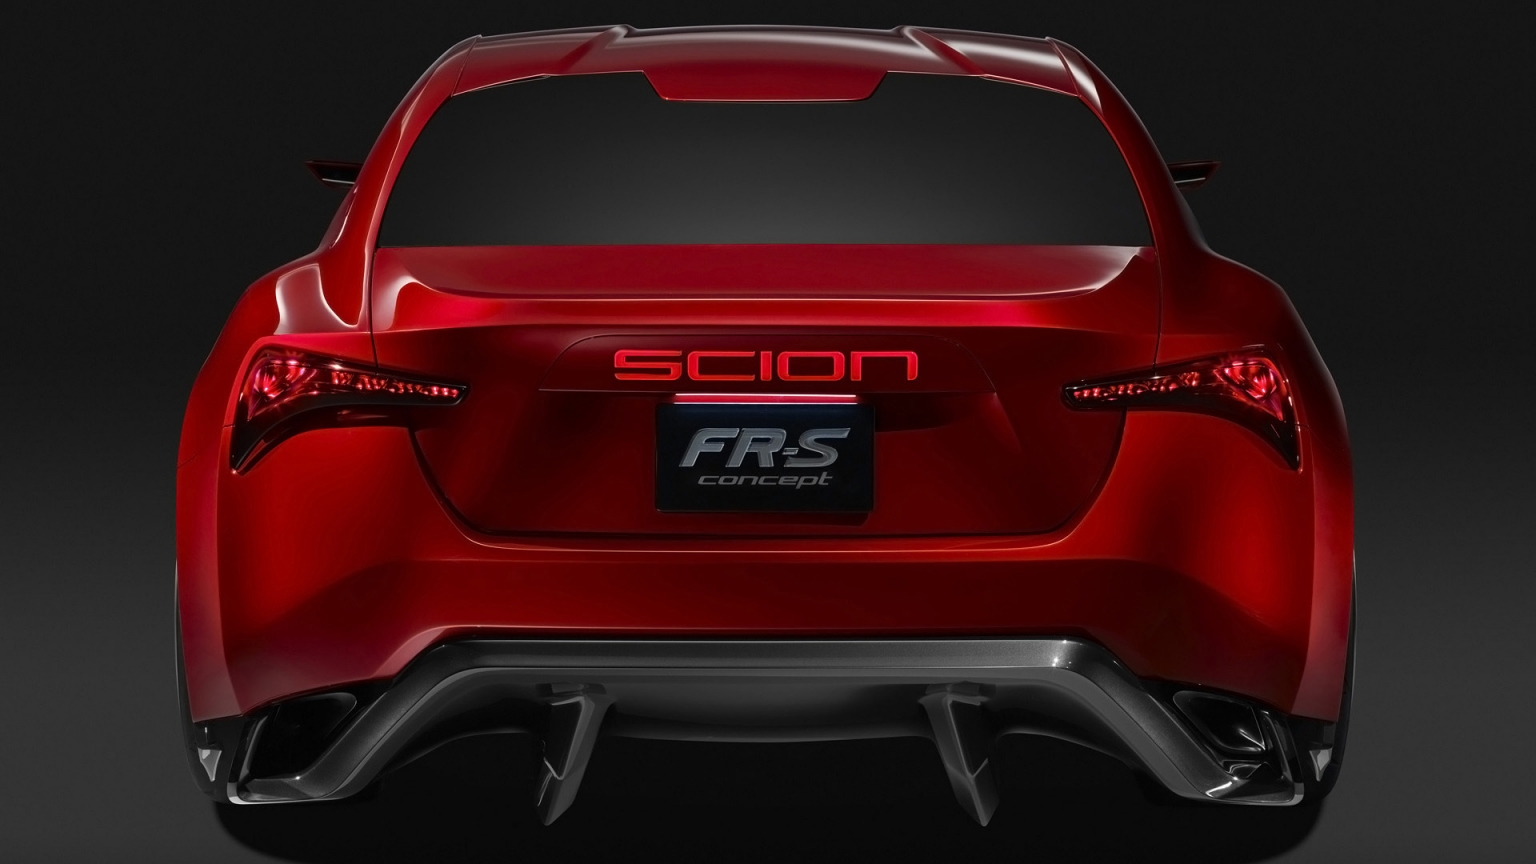 Scion FR S Concept Rear for 1536 x 864 HDTV resolution